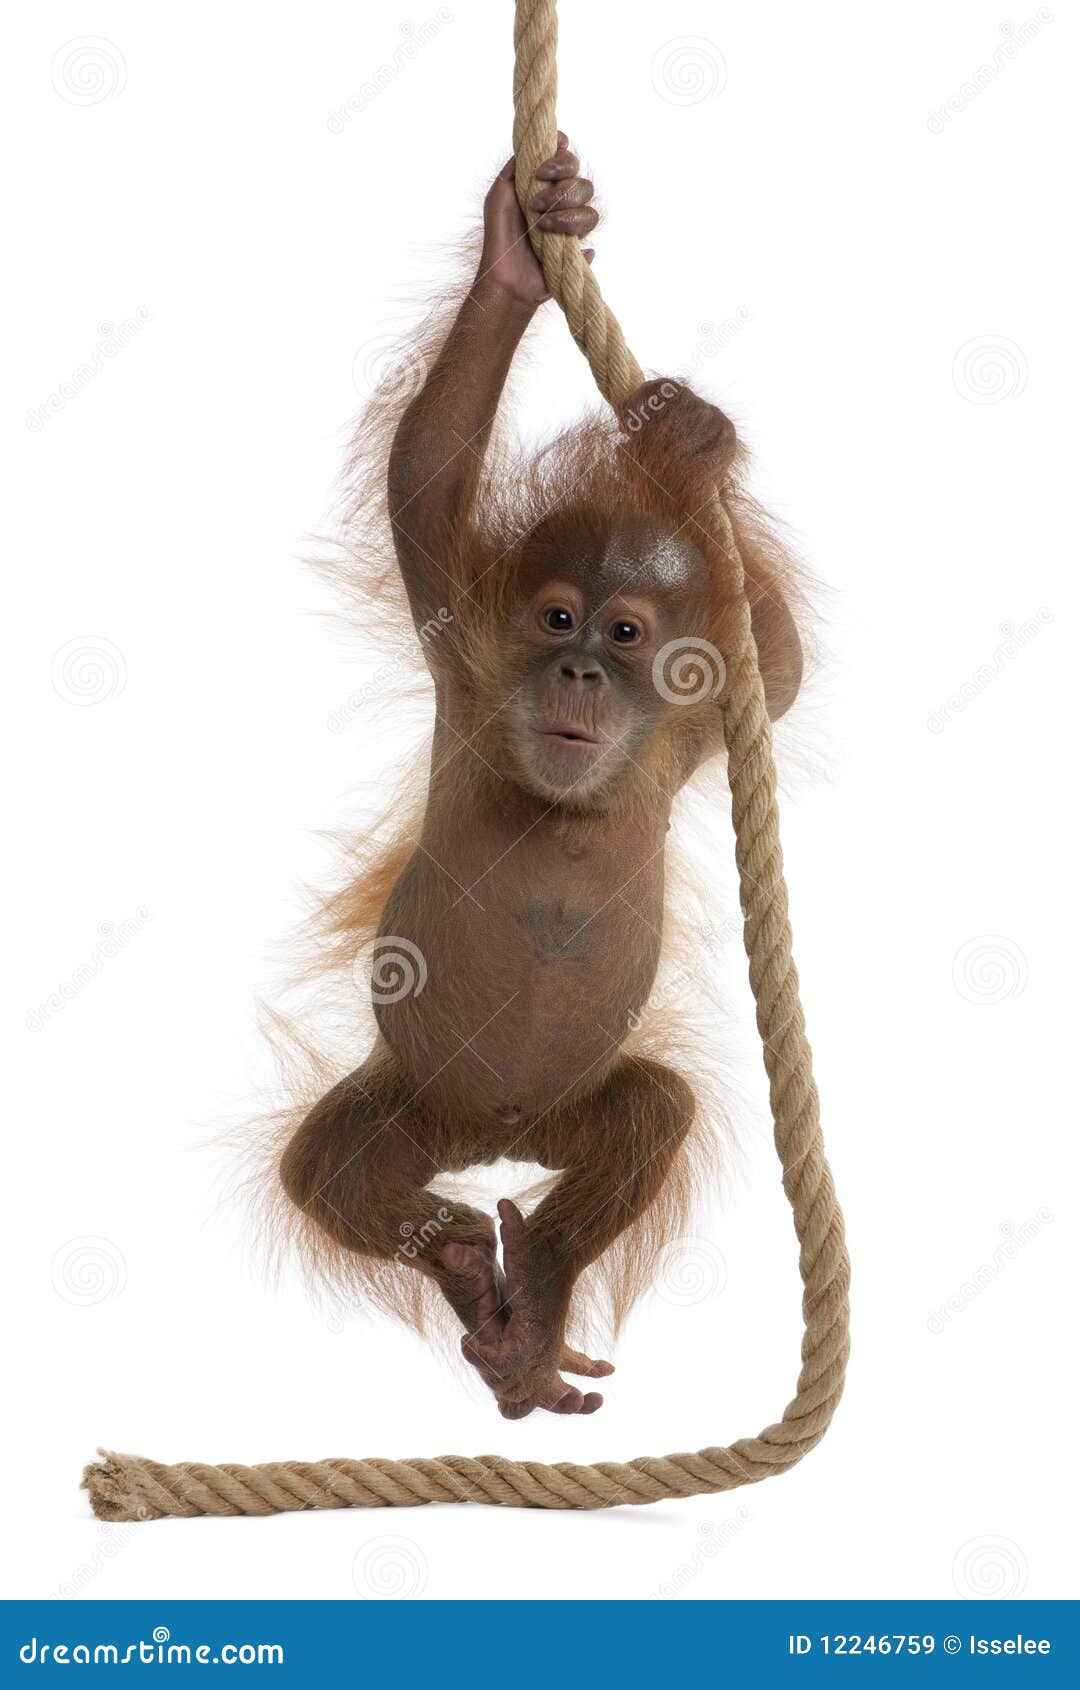 baby sumatran orangutan against white background